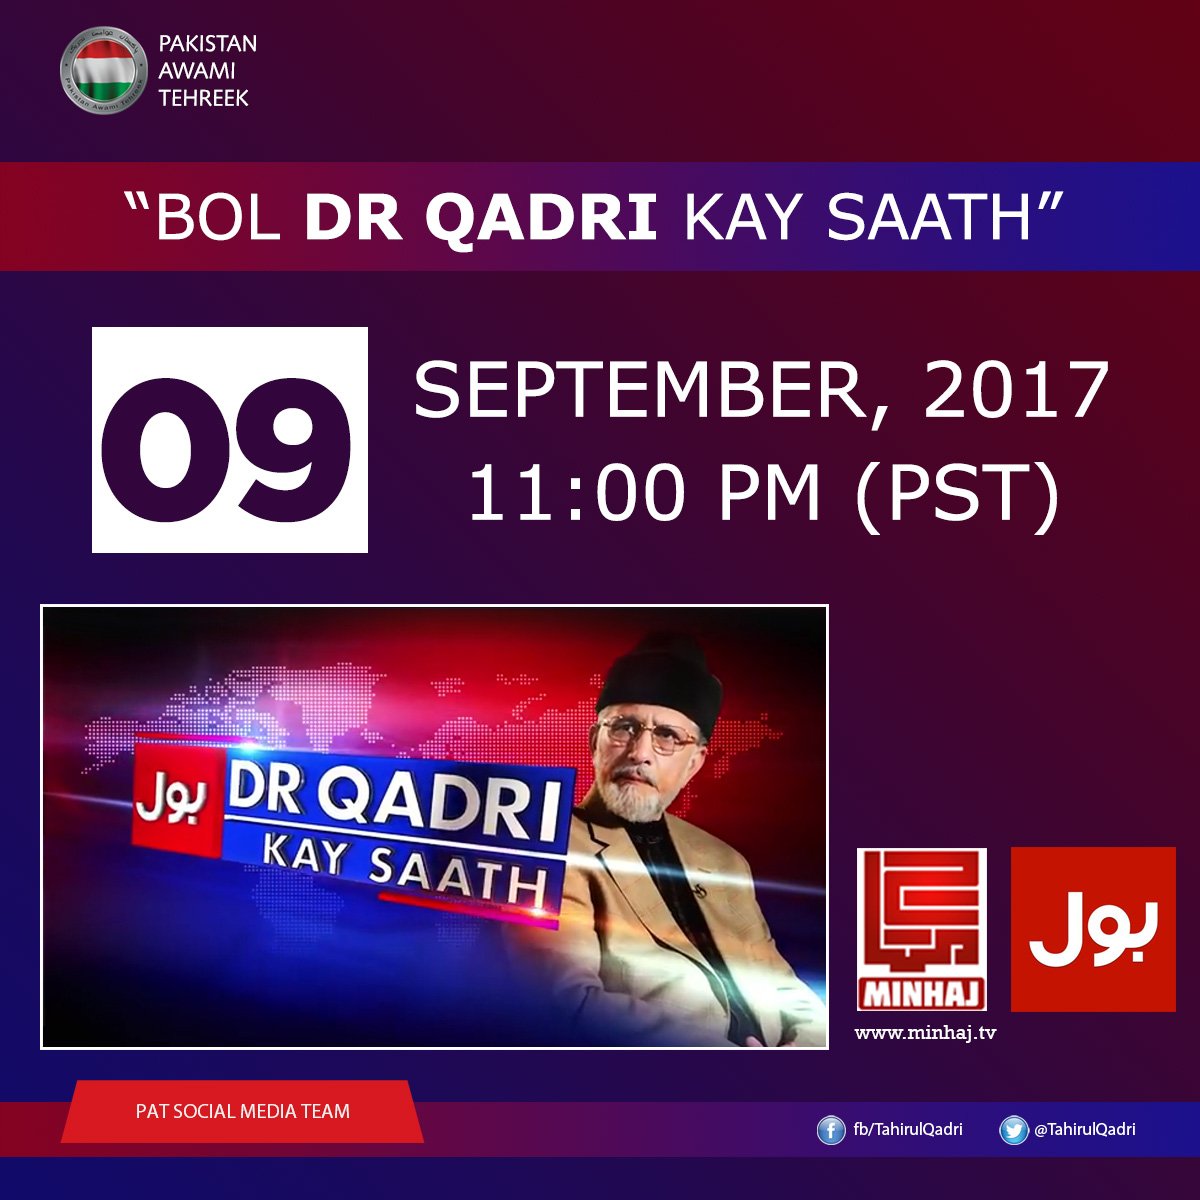 Watch Dr Tahir-ul-Qadri in progrm 'BOL Dr Qadri Kay Saath' on BOL News | Saturday, 09 September, at 11:00 PM